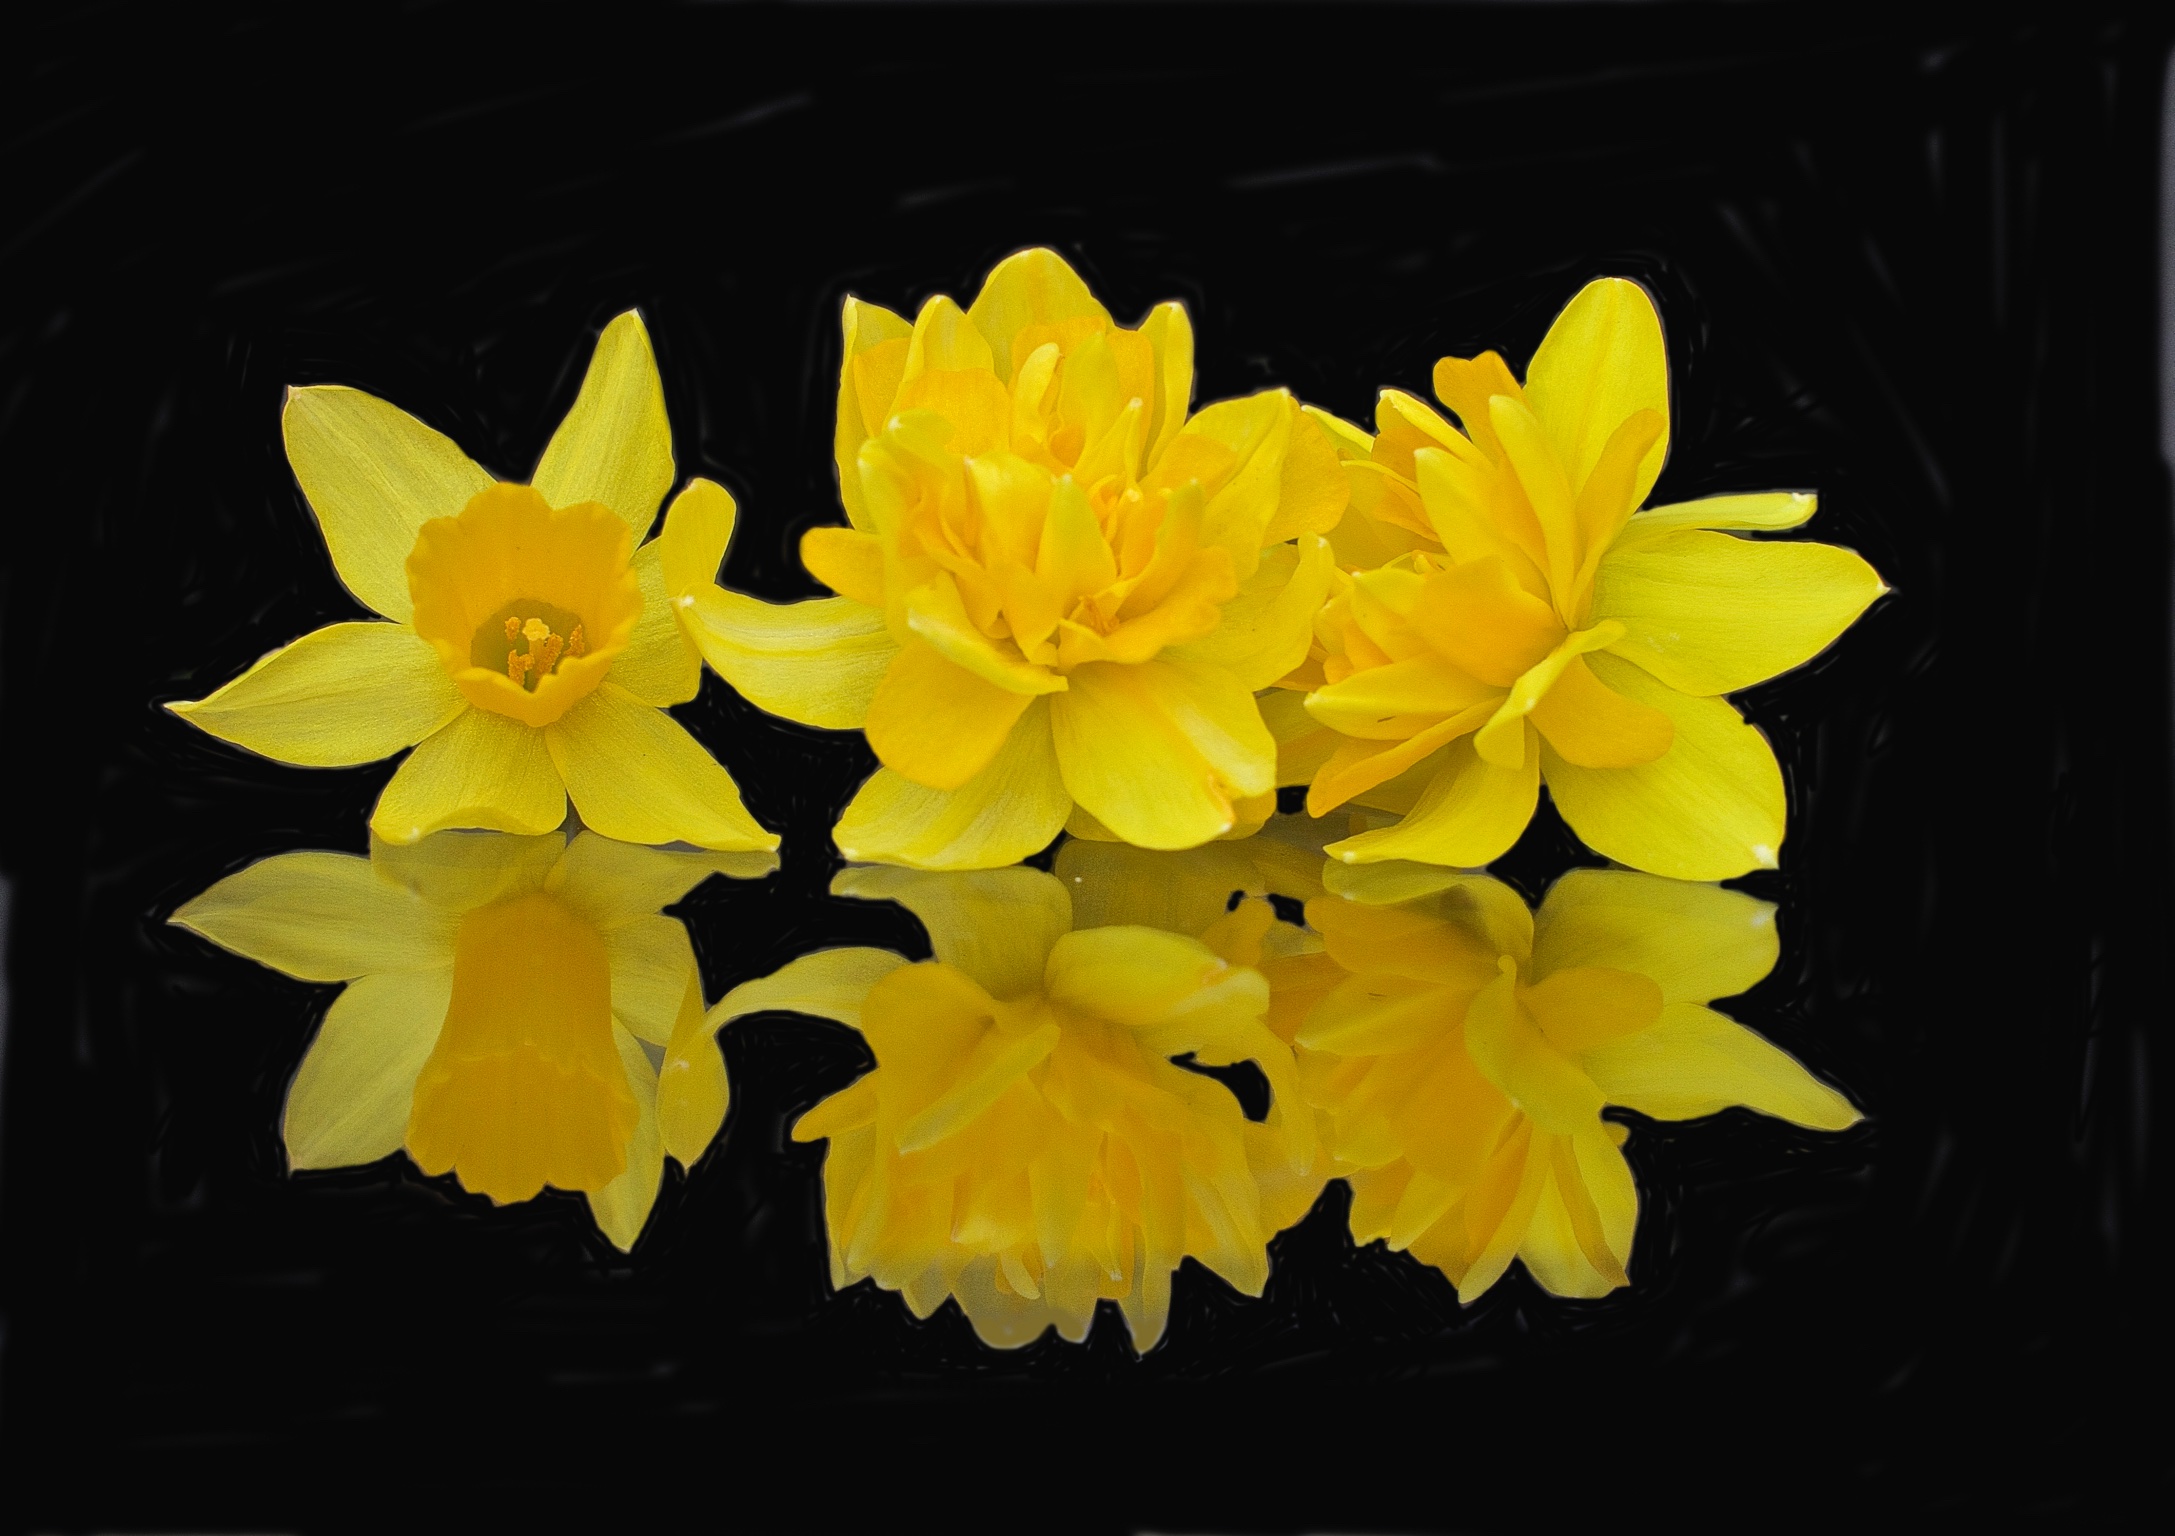 05 Daffodil Reflections